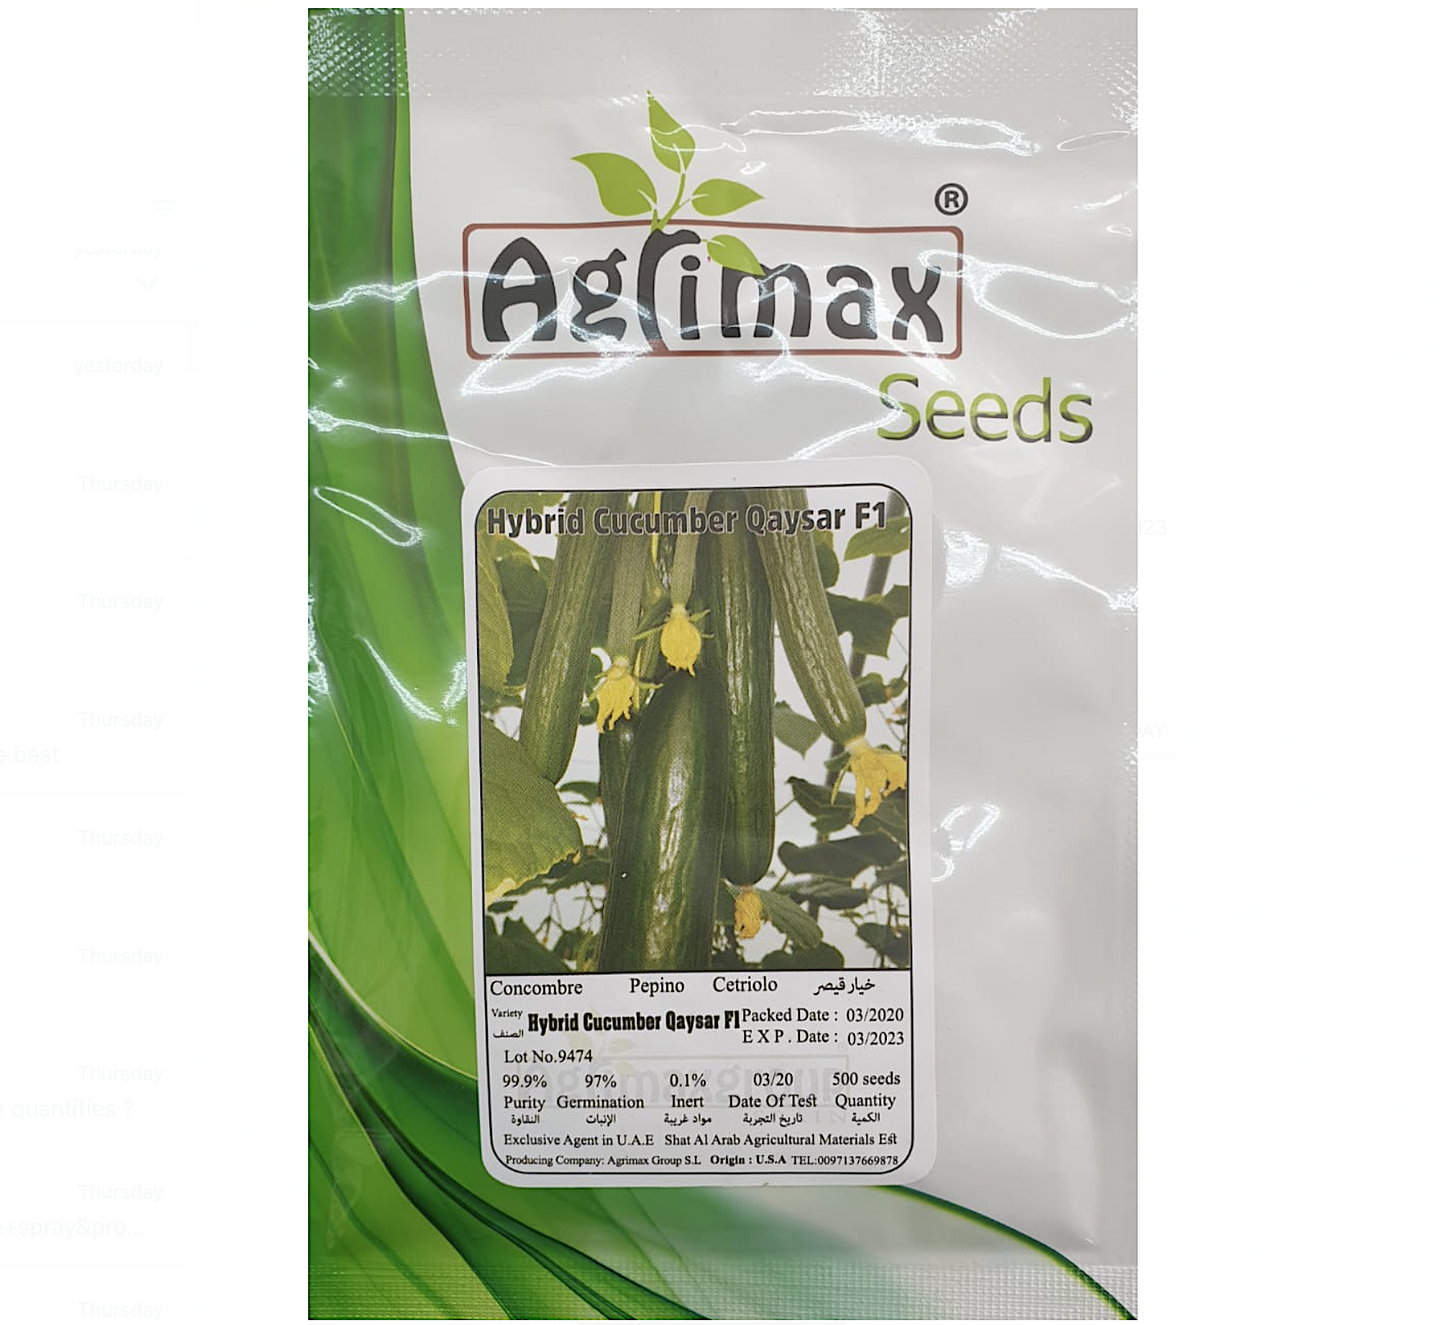 Cucumber Vegetable Seed  "Qaiser F1 Hybrid" By Agrimax